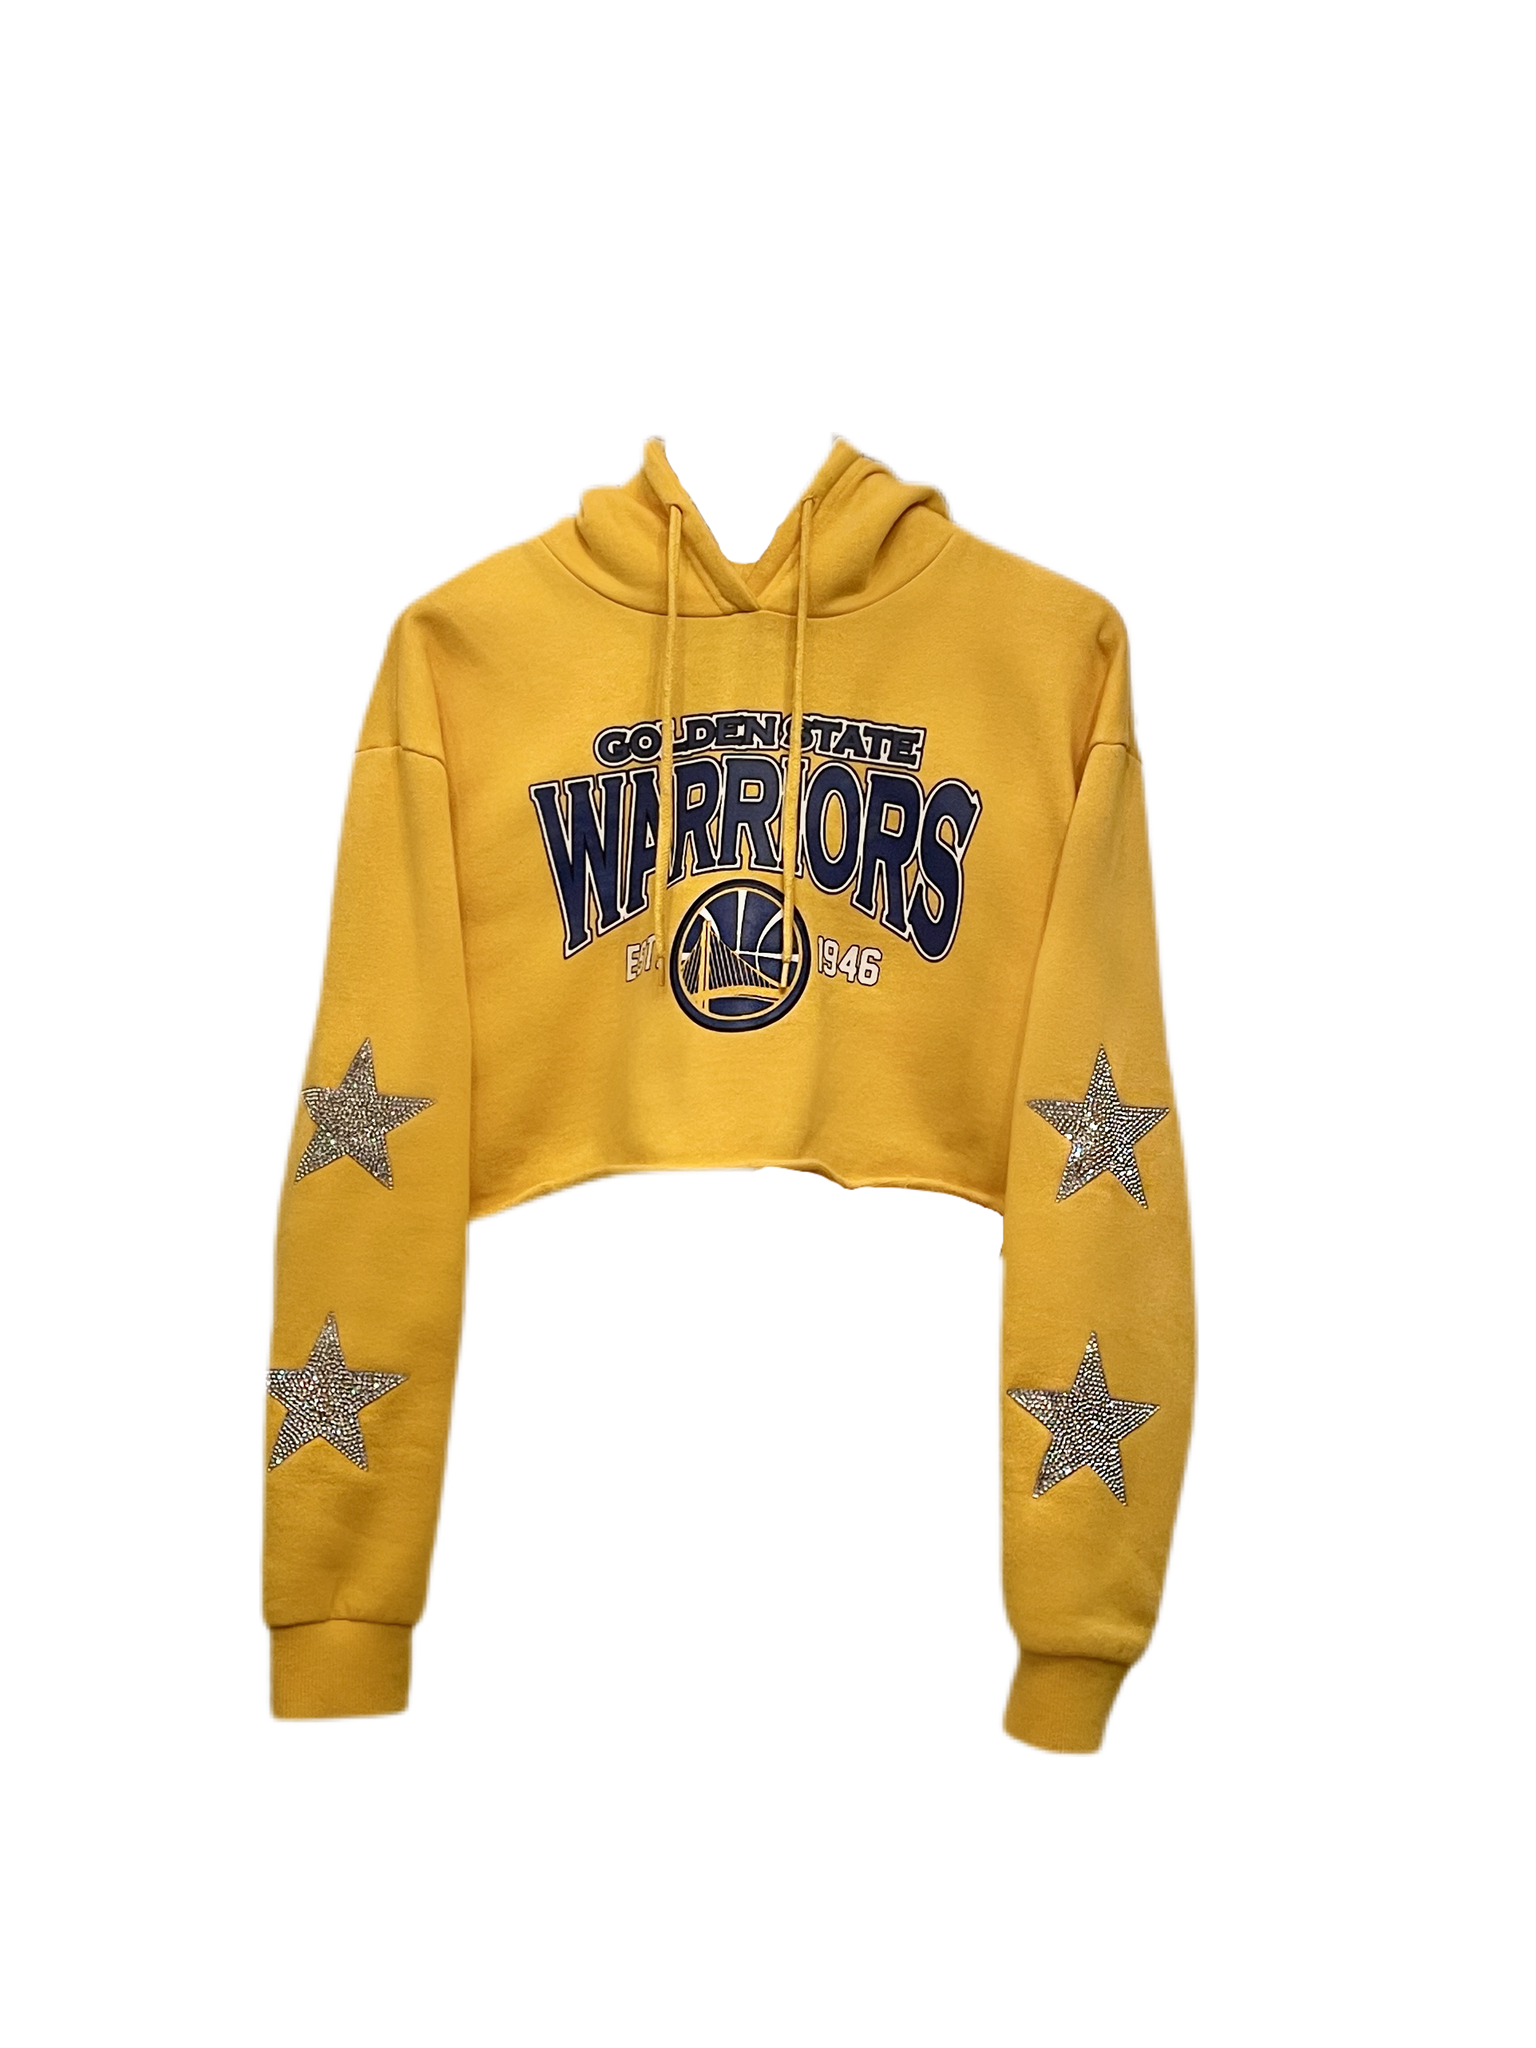 ShopCrystalRags Brooklyn Nets, NBA One of A Kind Vintage Sweatshirt with Crystal Star Design